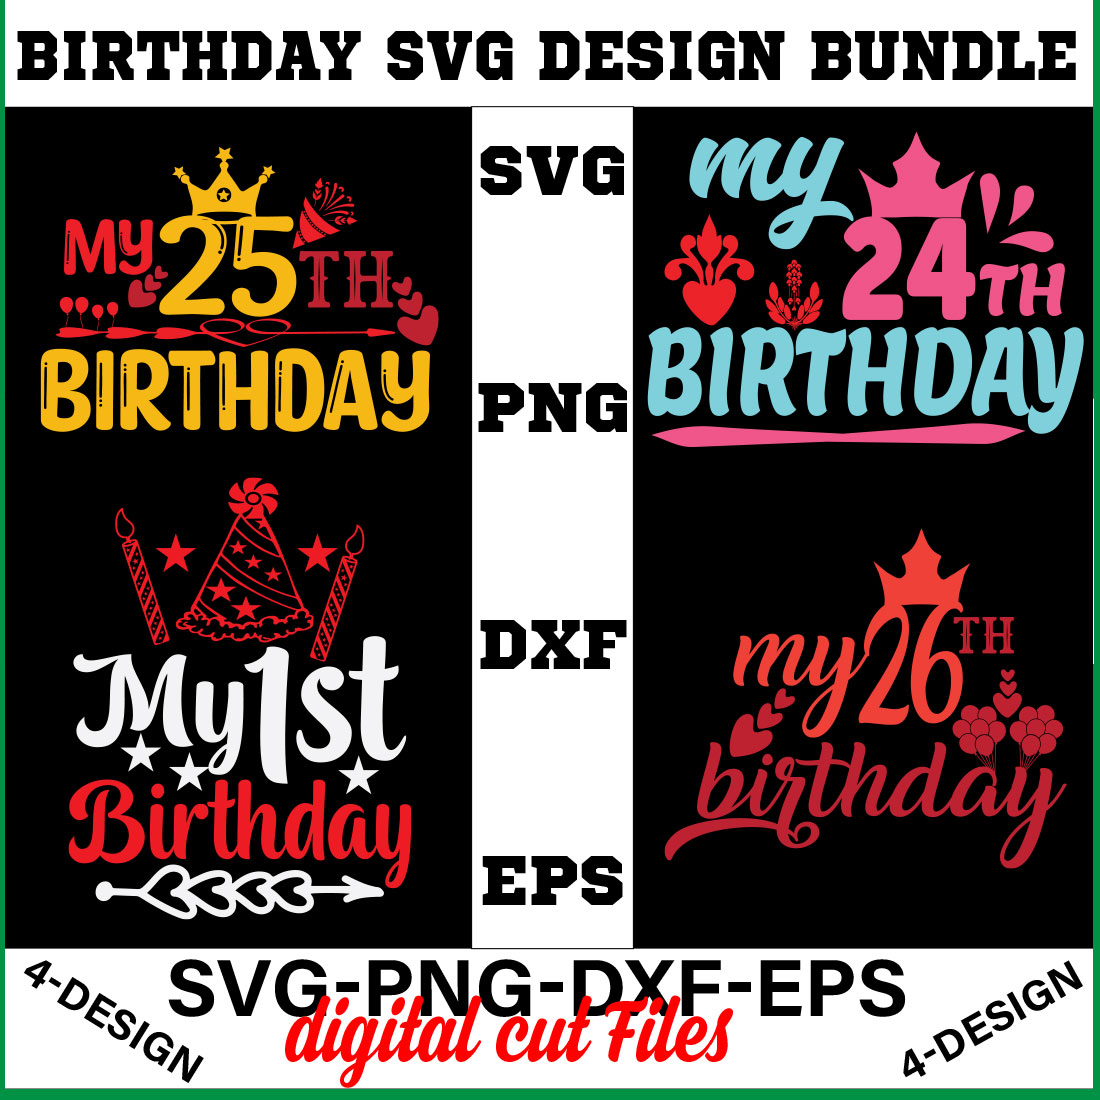 birthday svg design bundle Happy birthday svg bundle hand lettered birthday svg birthday party svg Volume-23 cover image.